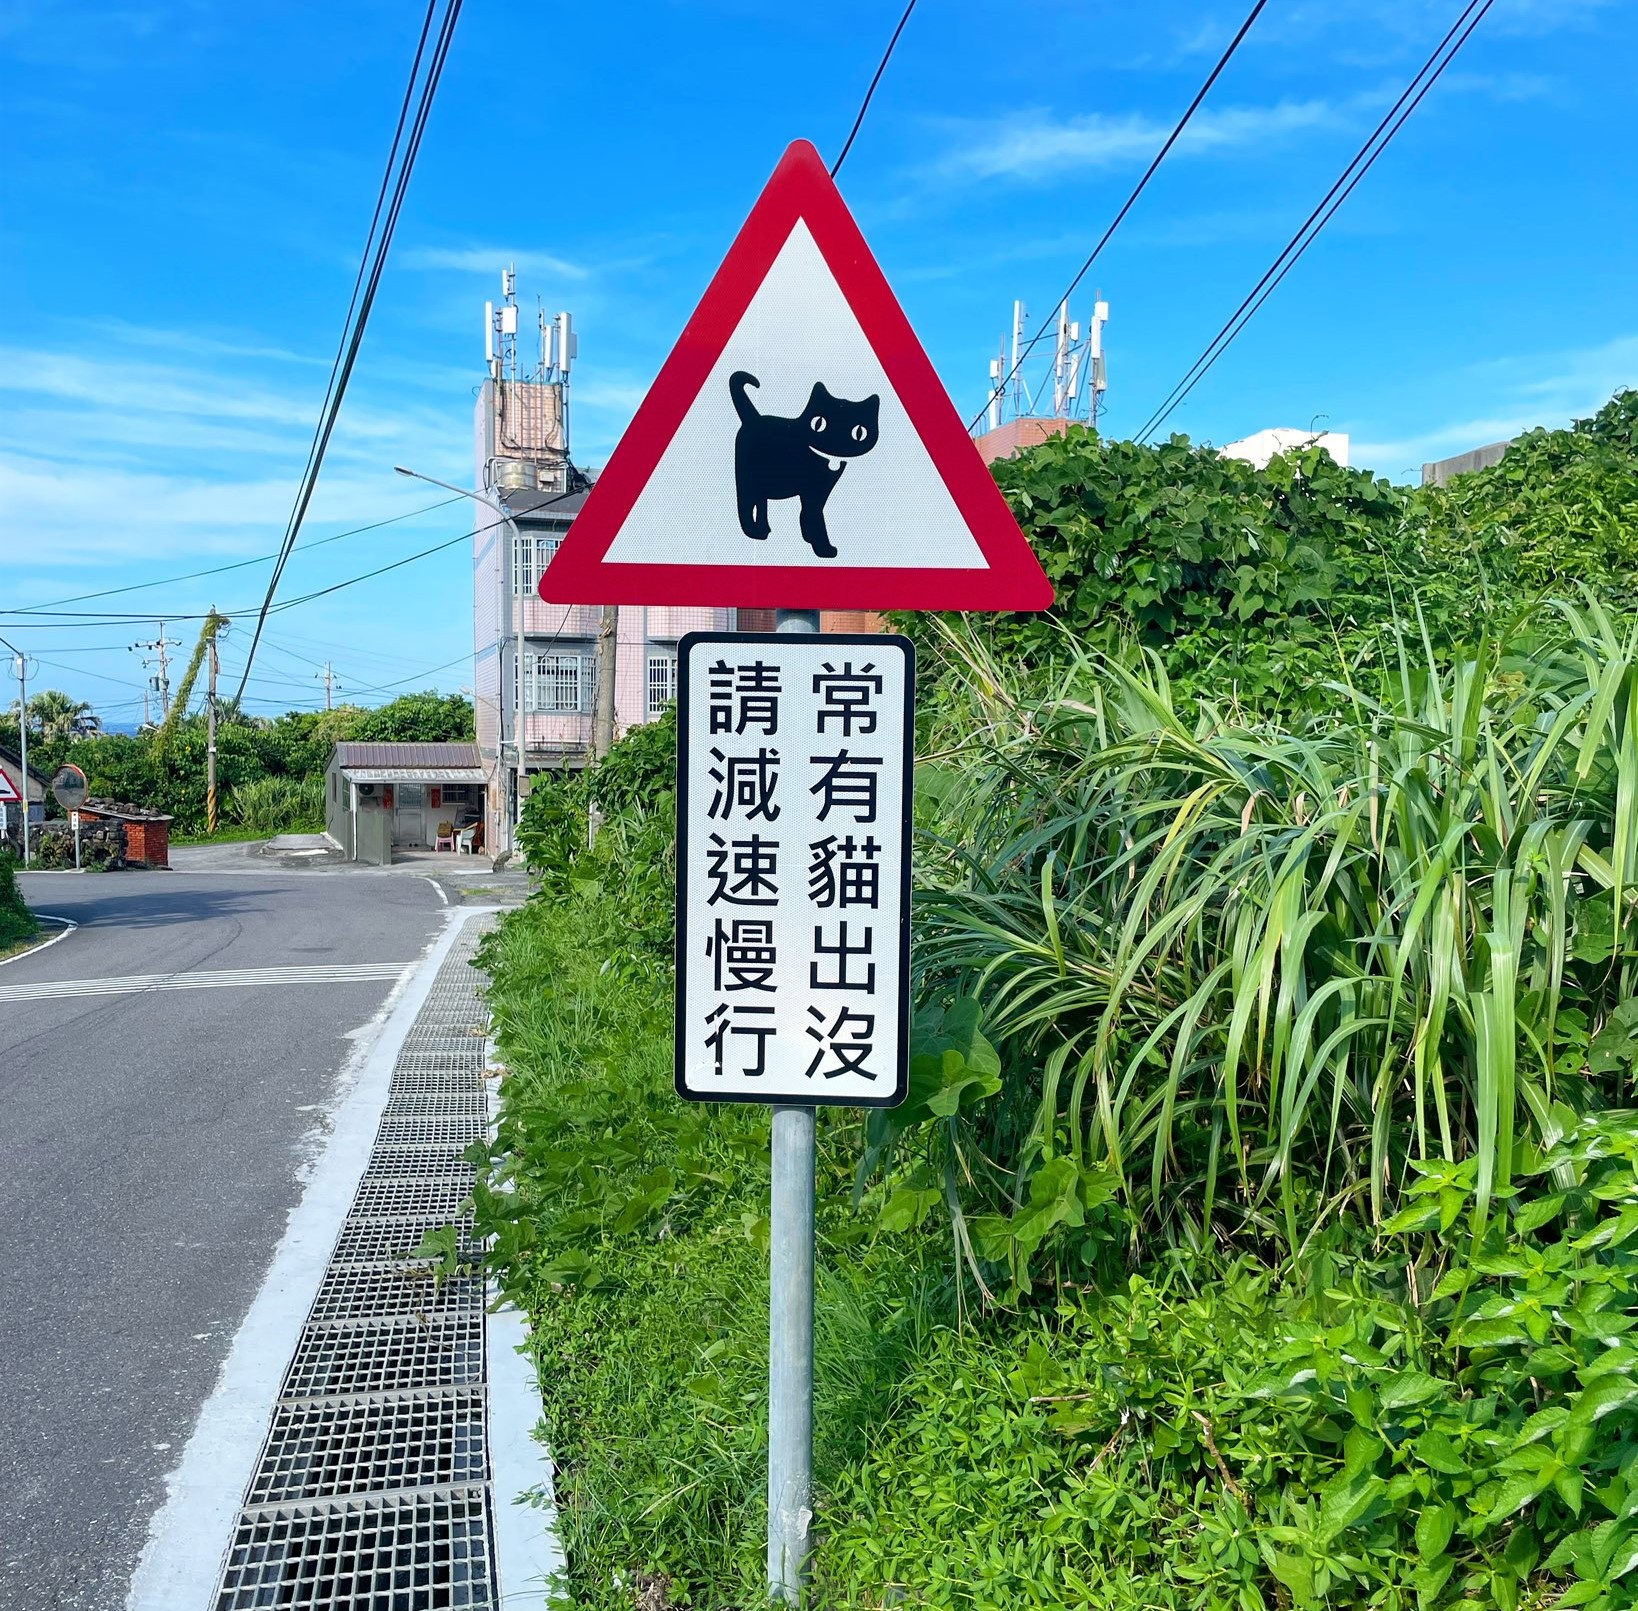 Biro Transportasi Kota New Taipei secara khusus memasang kembali rambu peringatan lalu lintas "Waspada terhadap Kucing" di Desa Kucing Houtong di sebelah Stasiun Kereta Houtong untuk mengingatkan orang yang lewat agar memperlambat kecepatan.  (Sumber foto : Biro Transportasi Kota New Taipei)